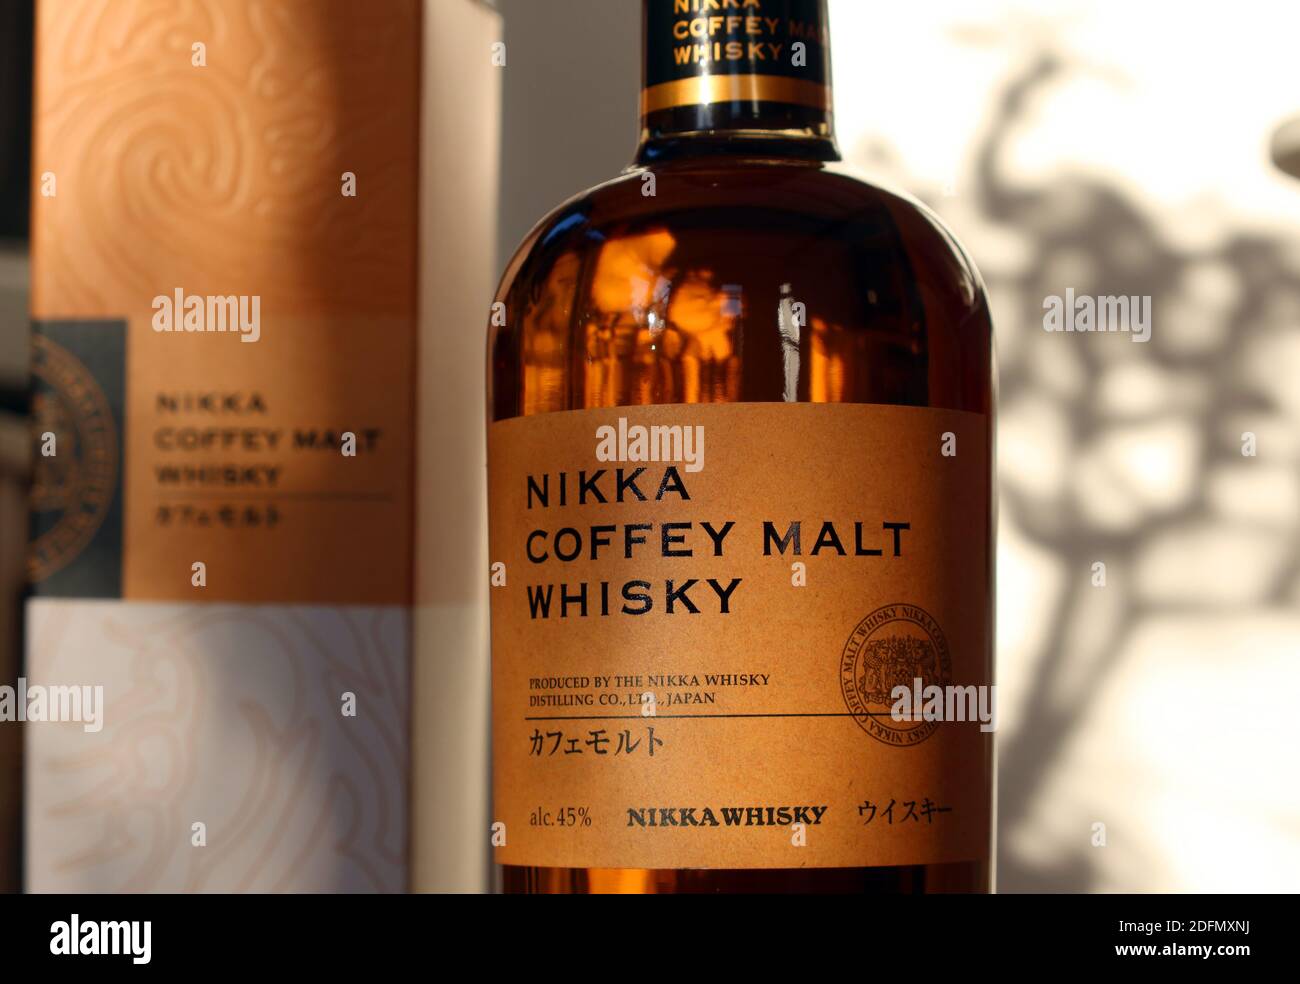 Nikka Whisky Distilling, Nikka Coffey malt Whisky, Japanese whisky Stock Photo